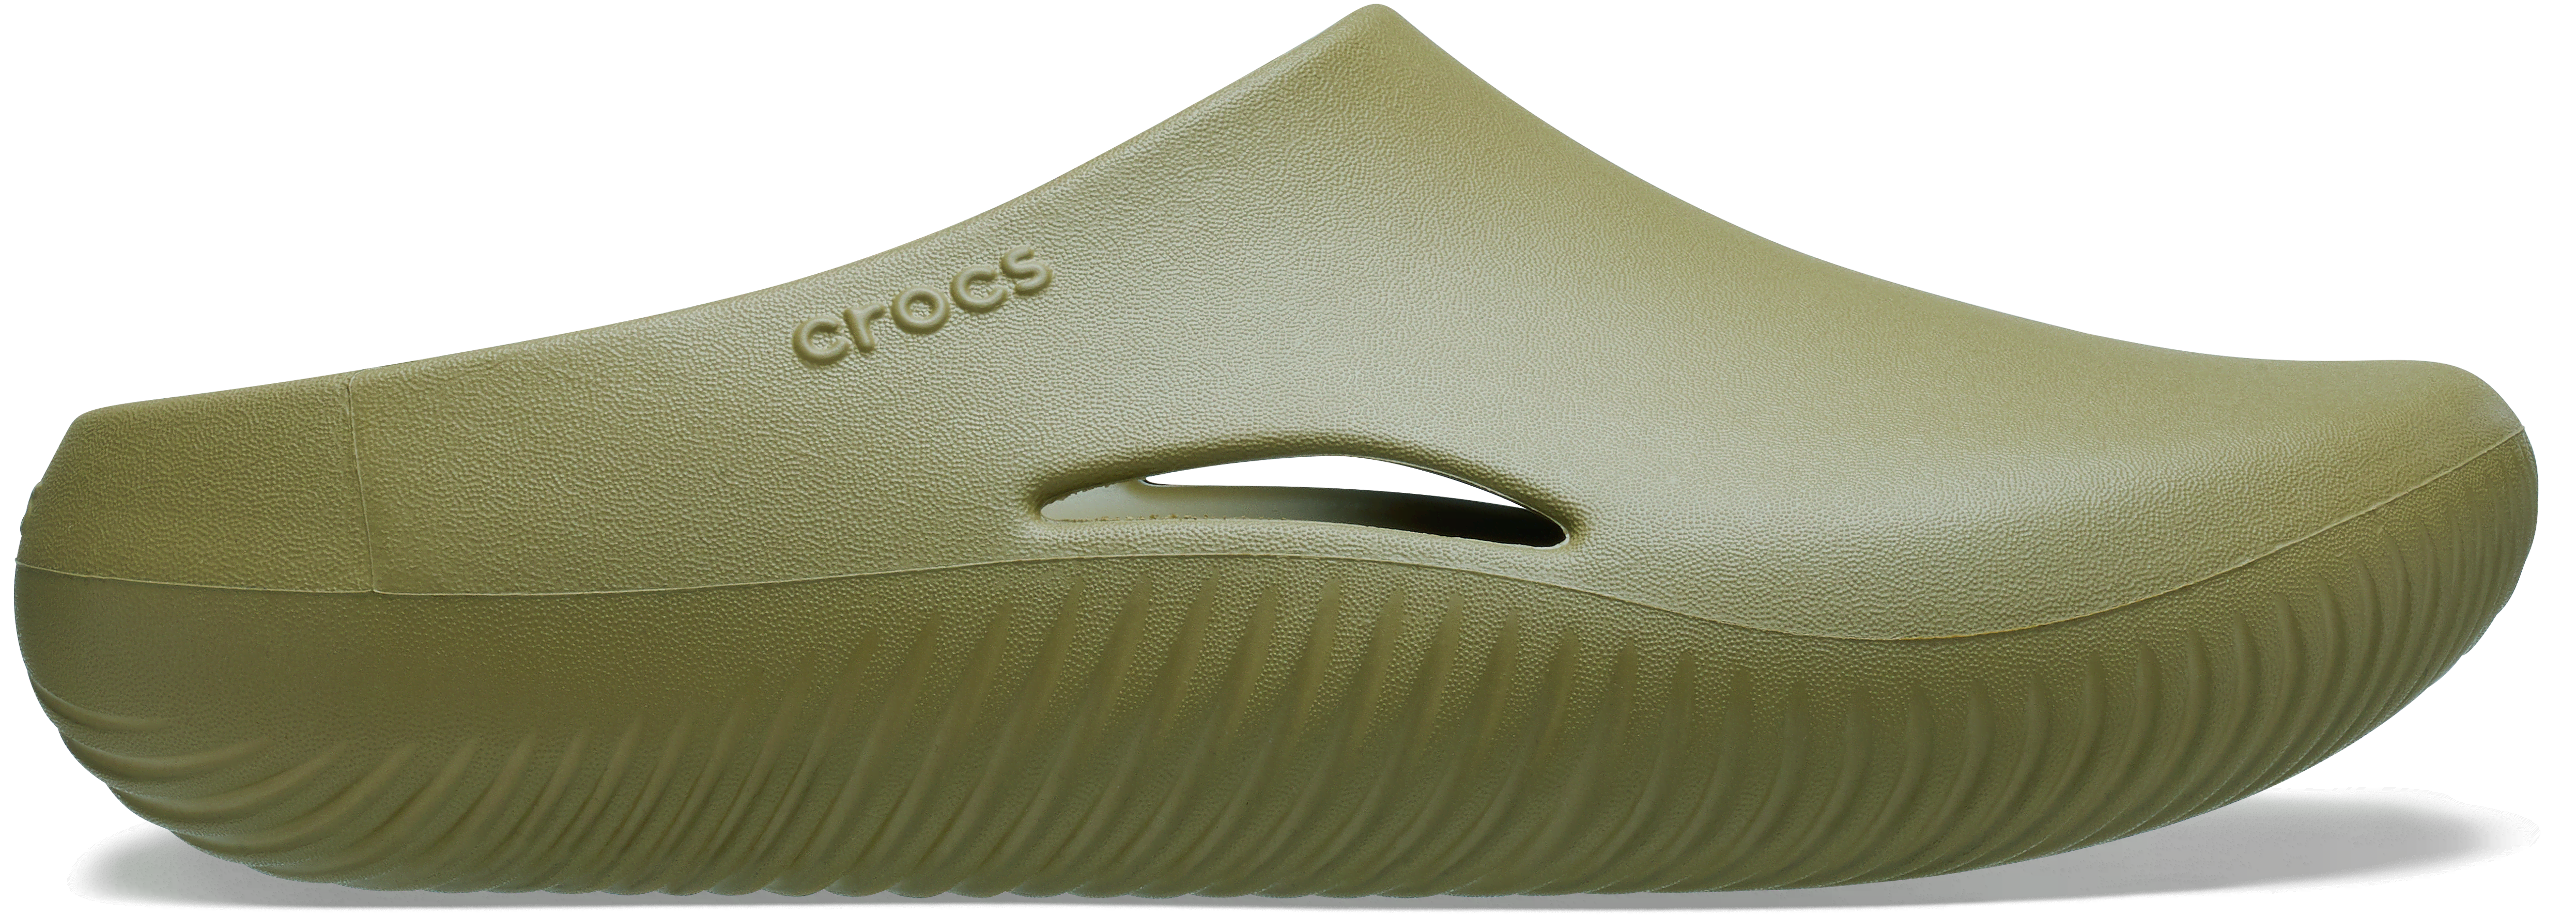 Crocs | Unisex | Mellow Recovery | Clogs | Aloe | M10